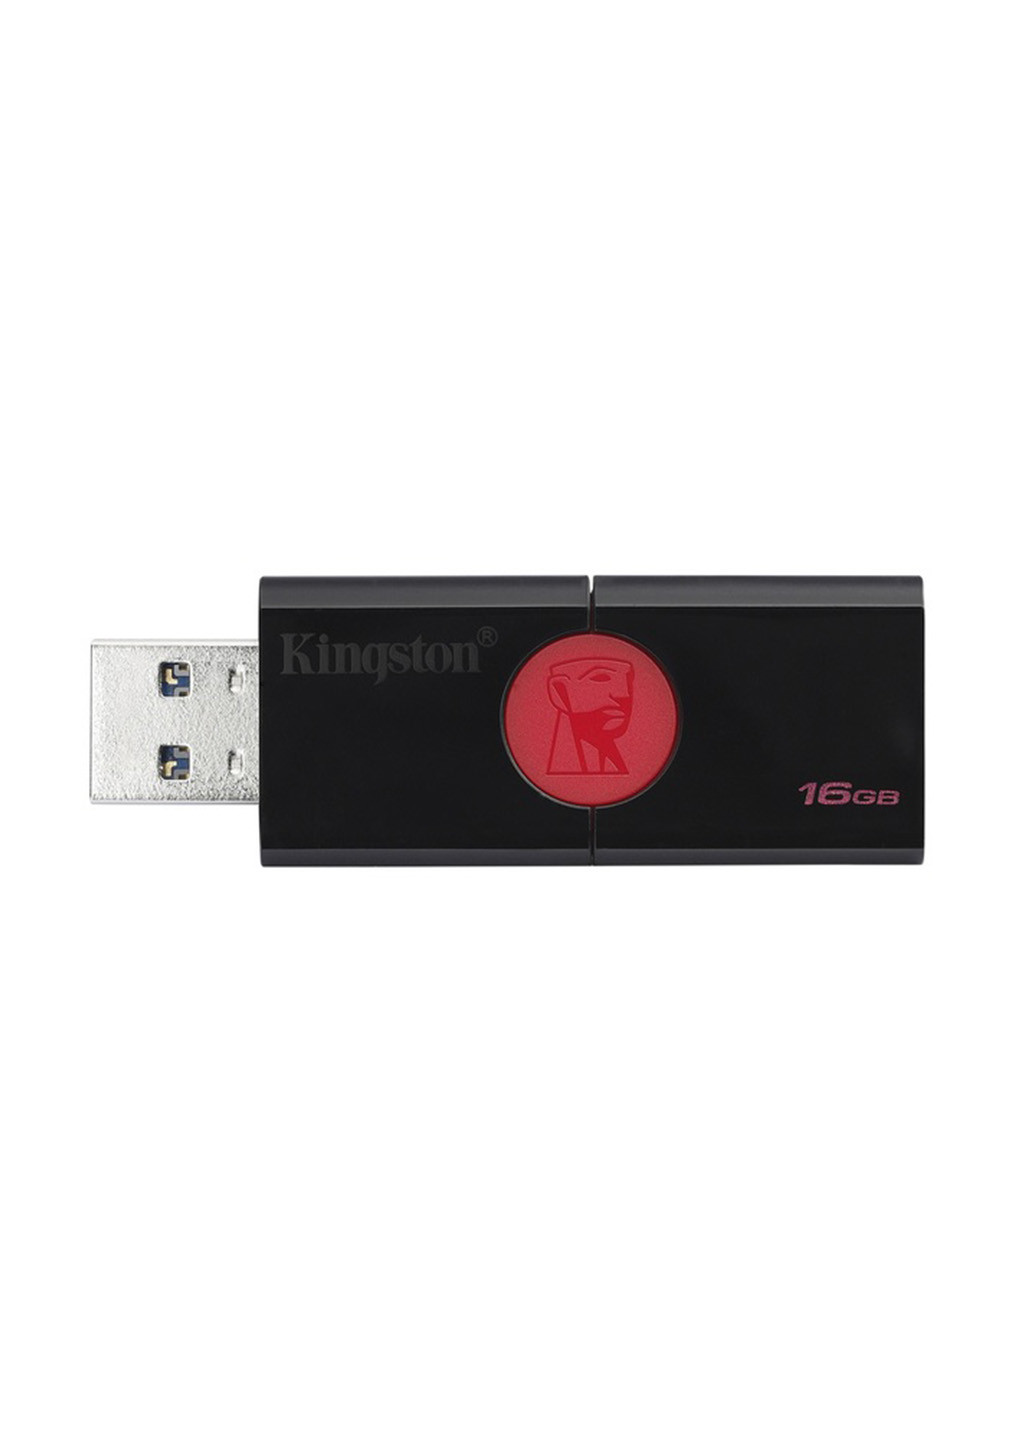 Флеш память USB DataTraveler 106 16GB USB 3.1 (DT106/16GB) Kingston флеш память usb kingston datatraveler 106 16gb usb 3.1 (dt106/16gb) (135165502)